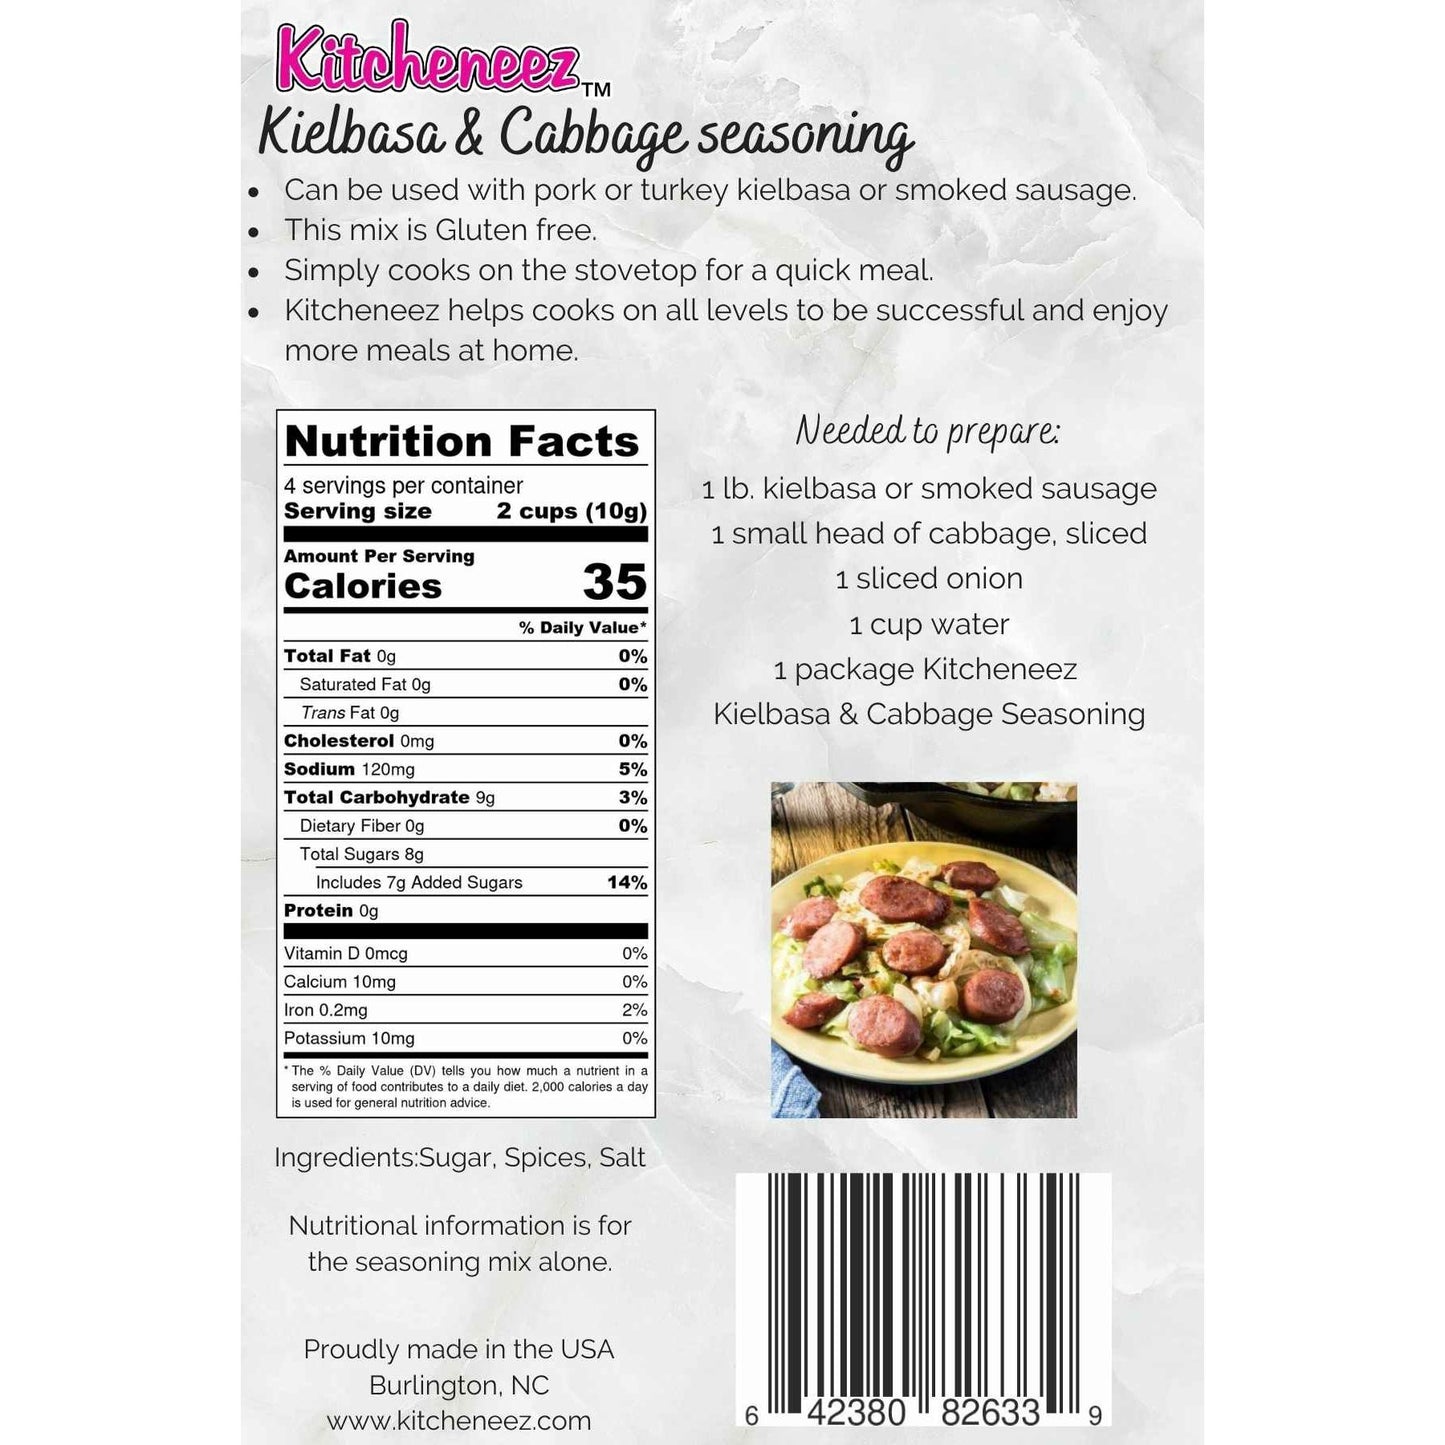 Kielbasa & Cabbage Seasoning